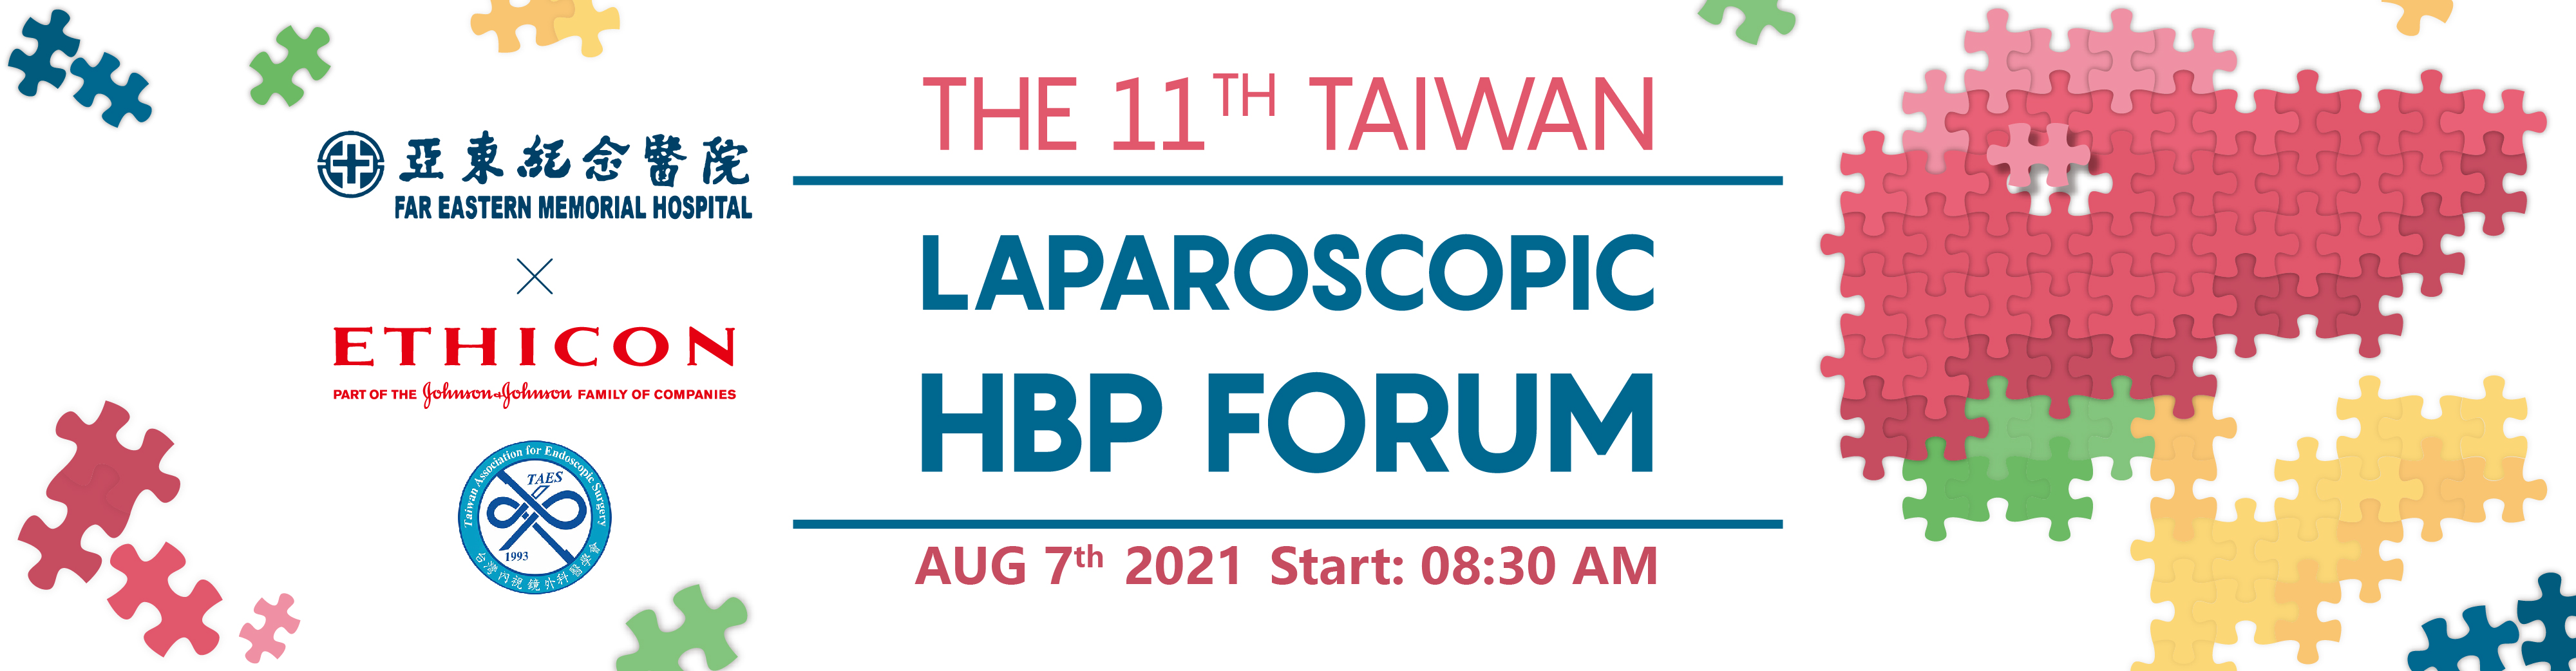 The 11th Taiwan Laparoscopic HBP Forum橫幅